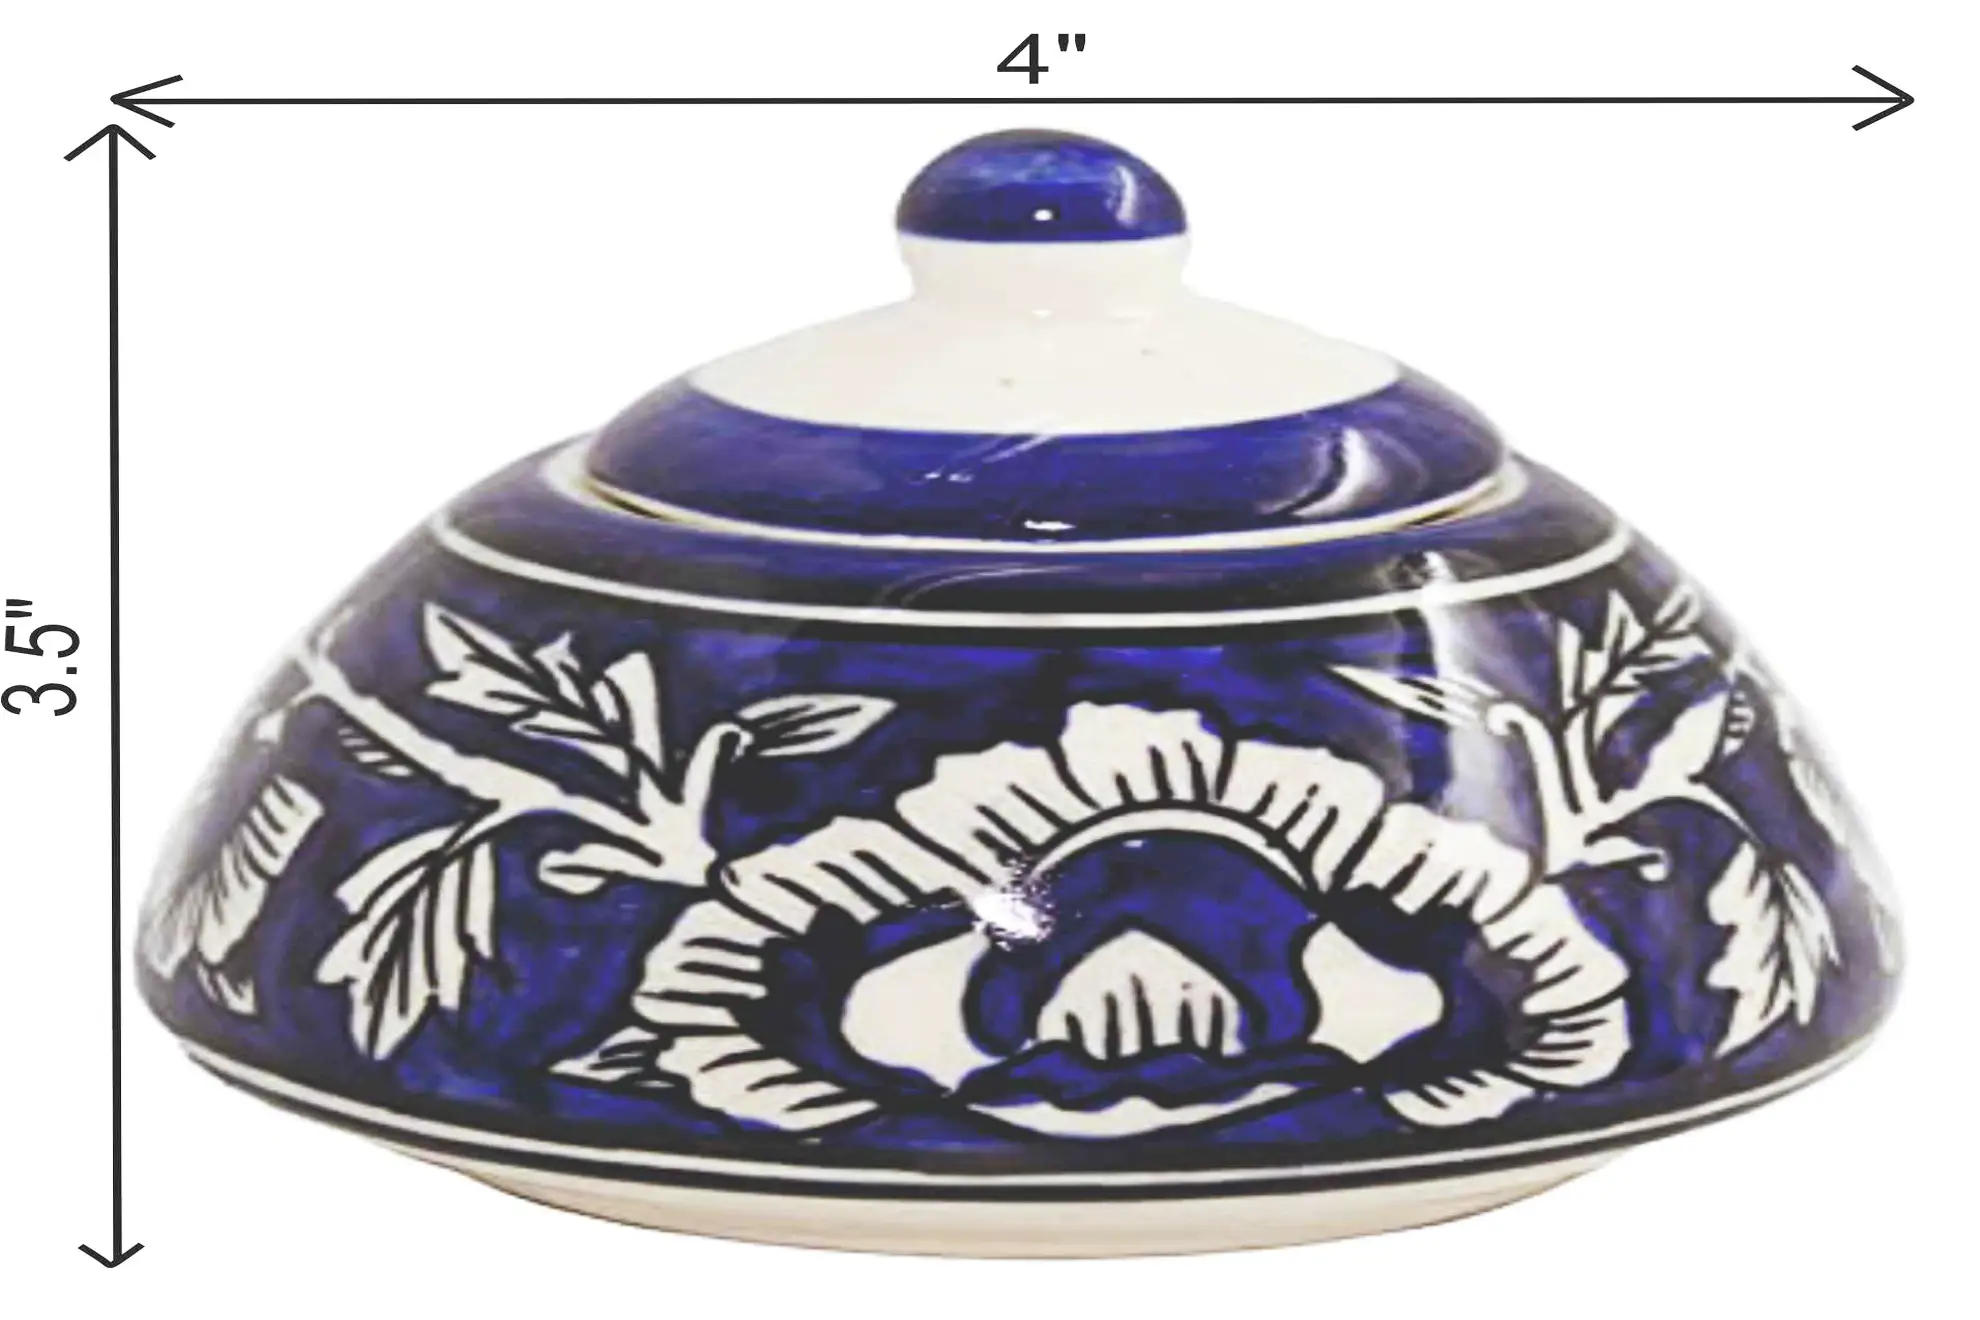 Jacobean - Handmade Ceramic Sugar Pot